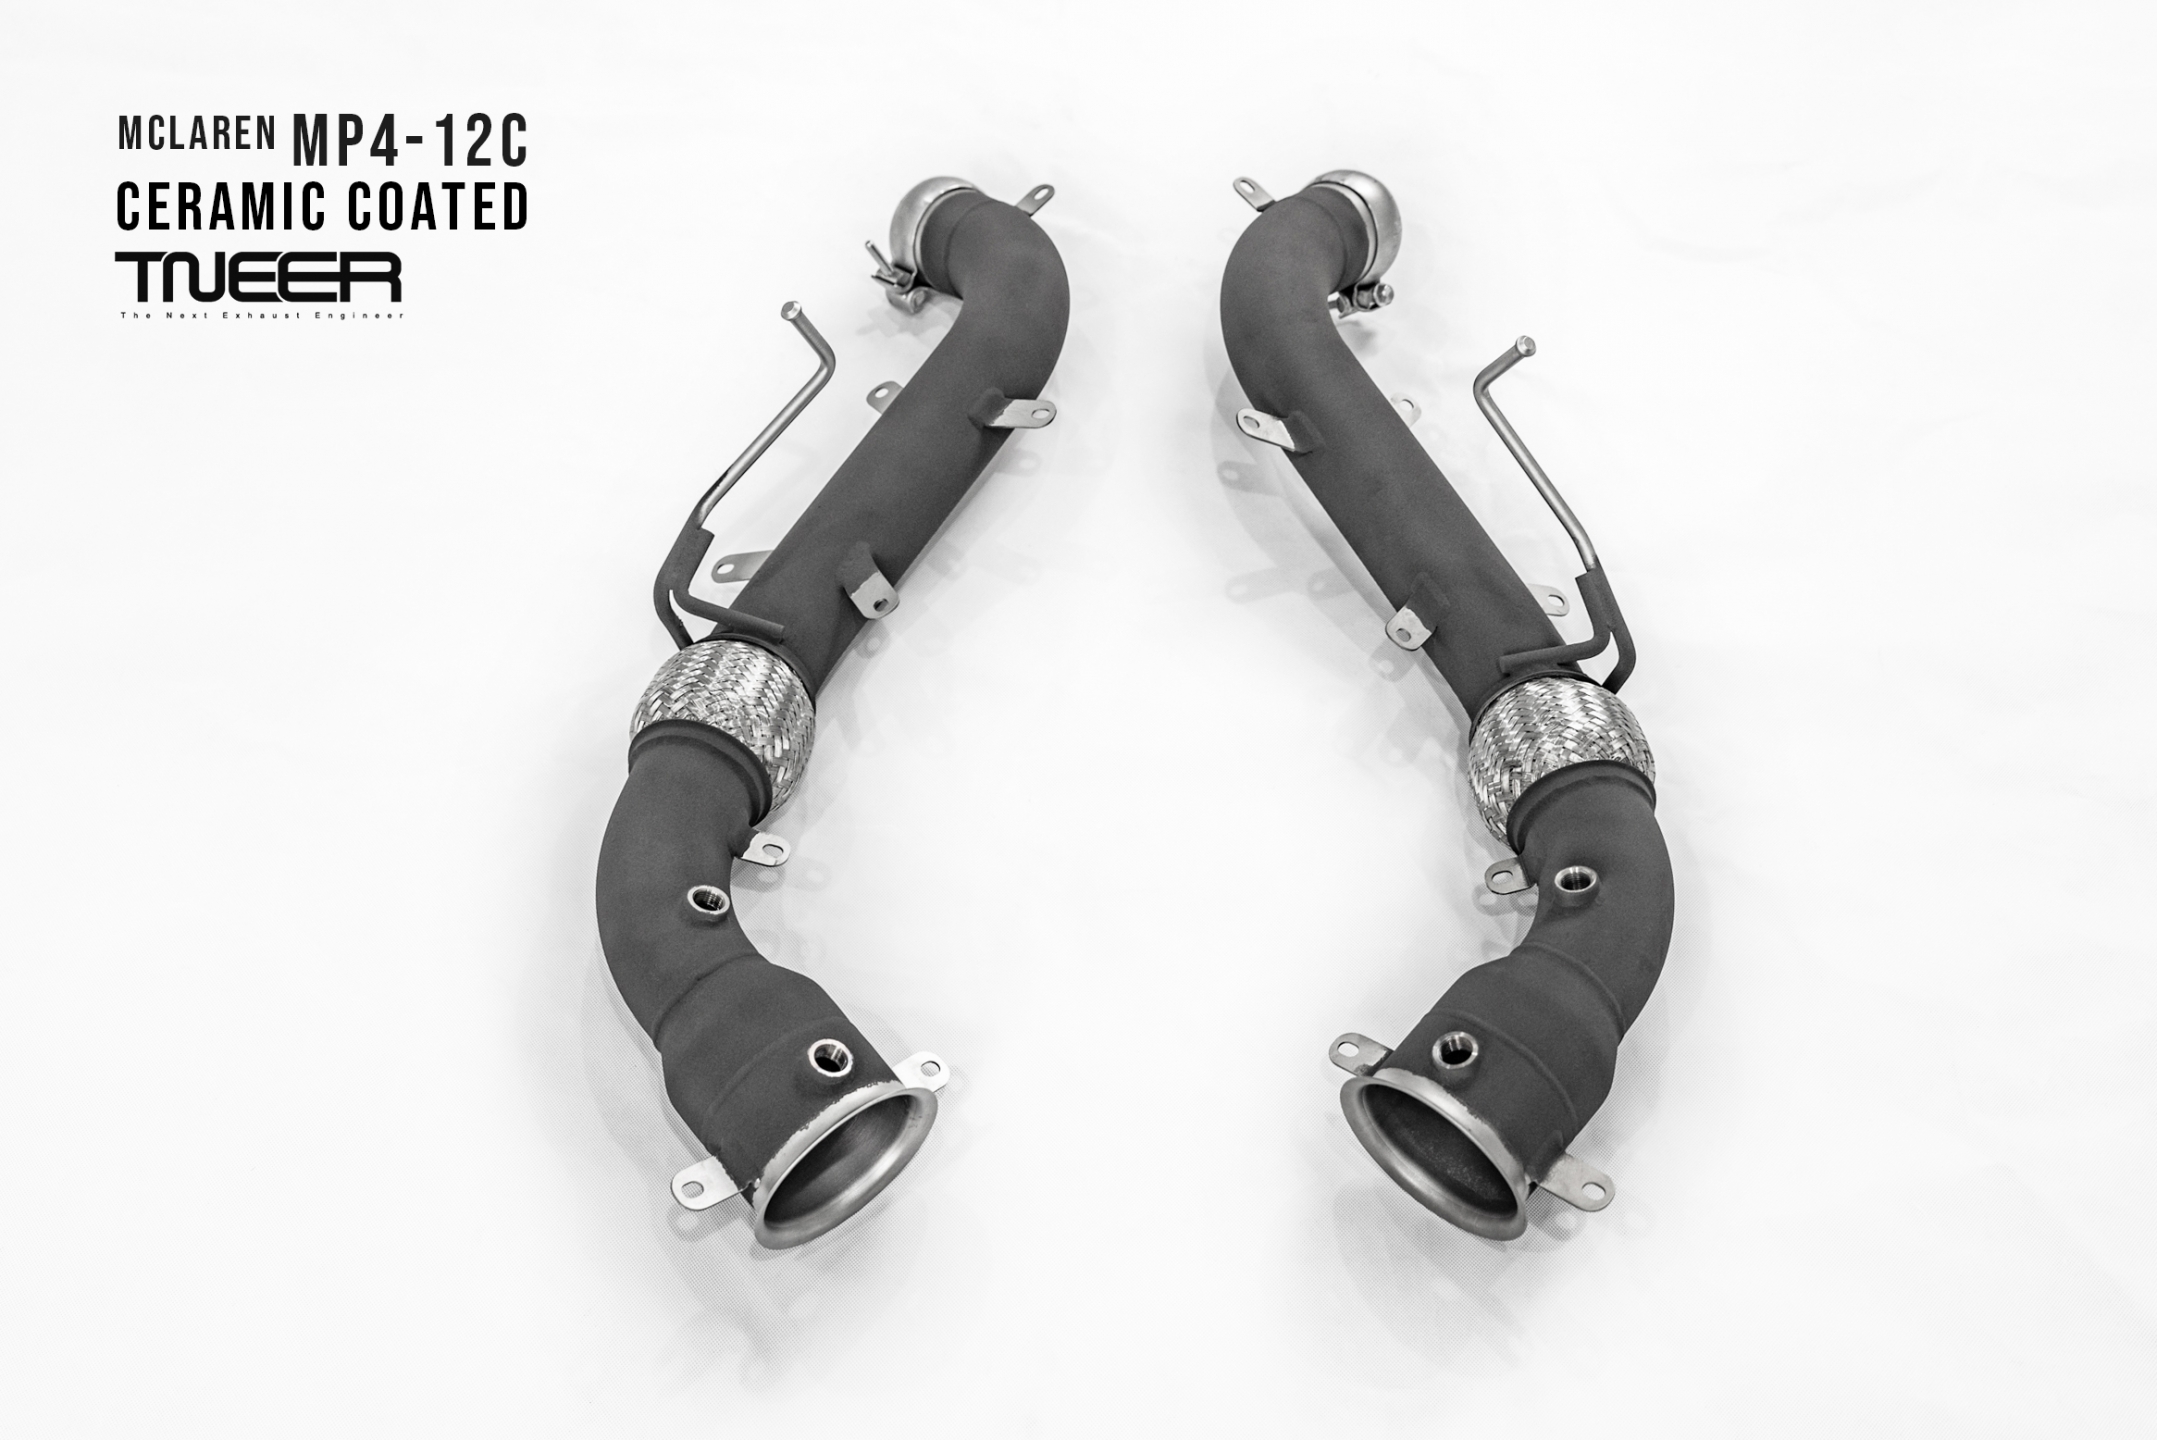 McLaren MP4-12C TNEER Catback Valvetronic Performance Exhaust System